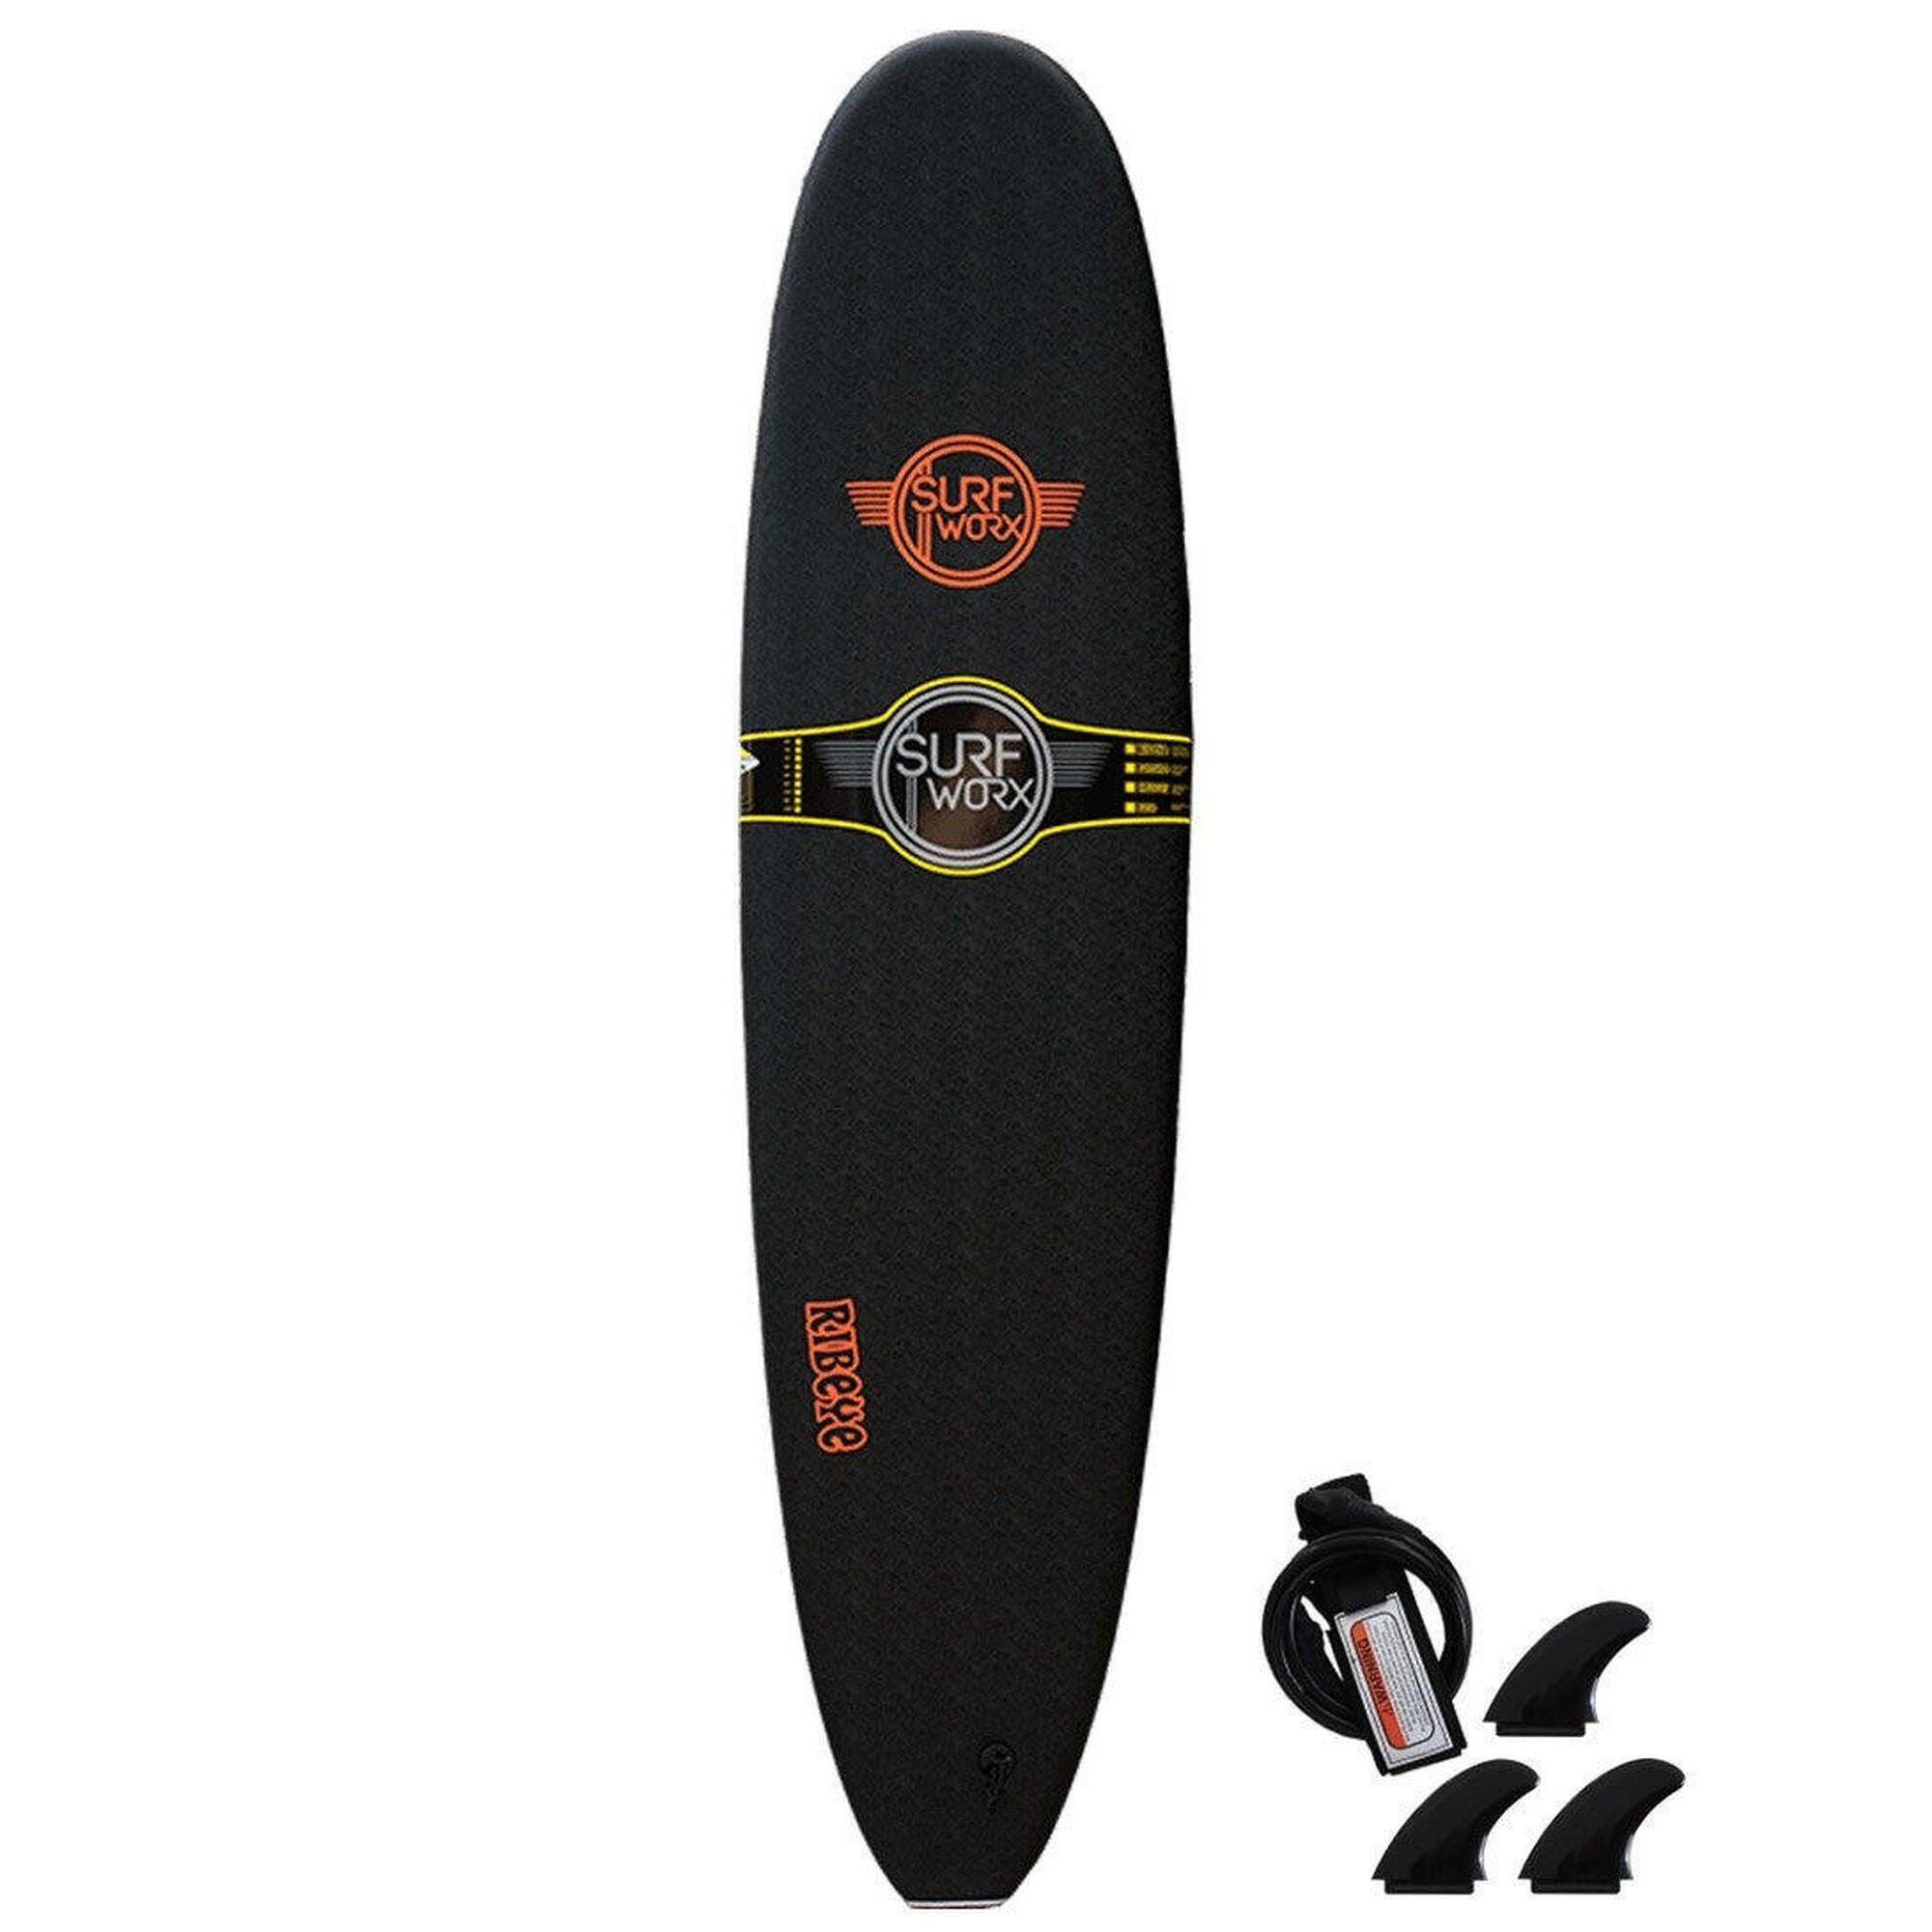 Surfworx Ribeye Mini Mal soft surfboard 7ft 6 Black 1/4